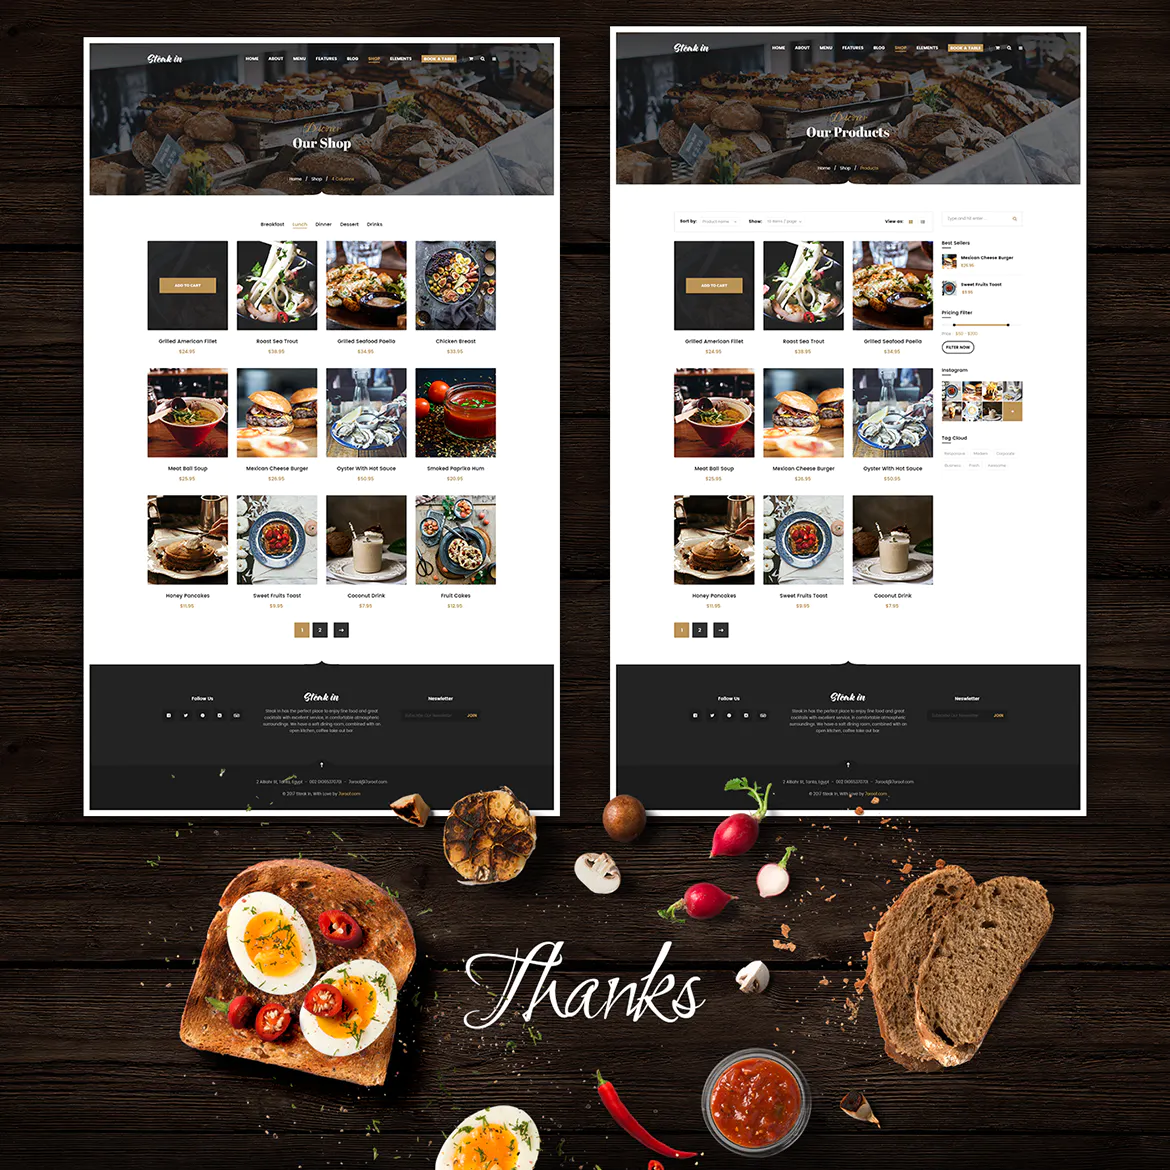 Steak In – Restaurant & Cafe HTML5 Template